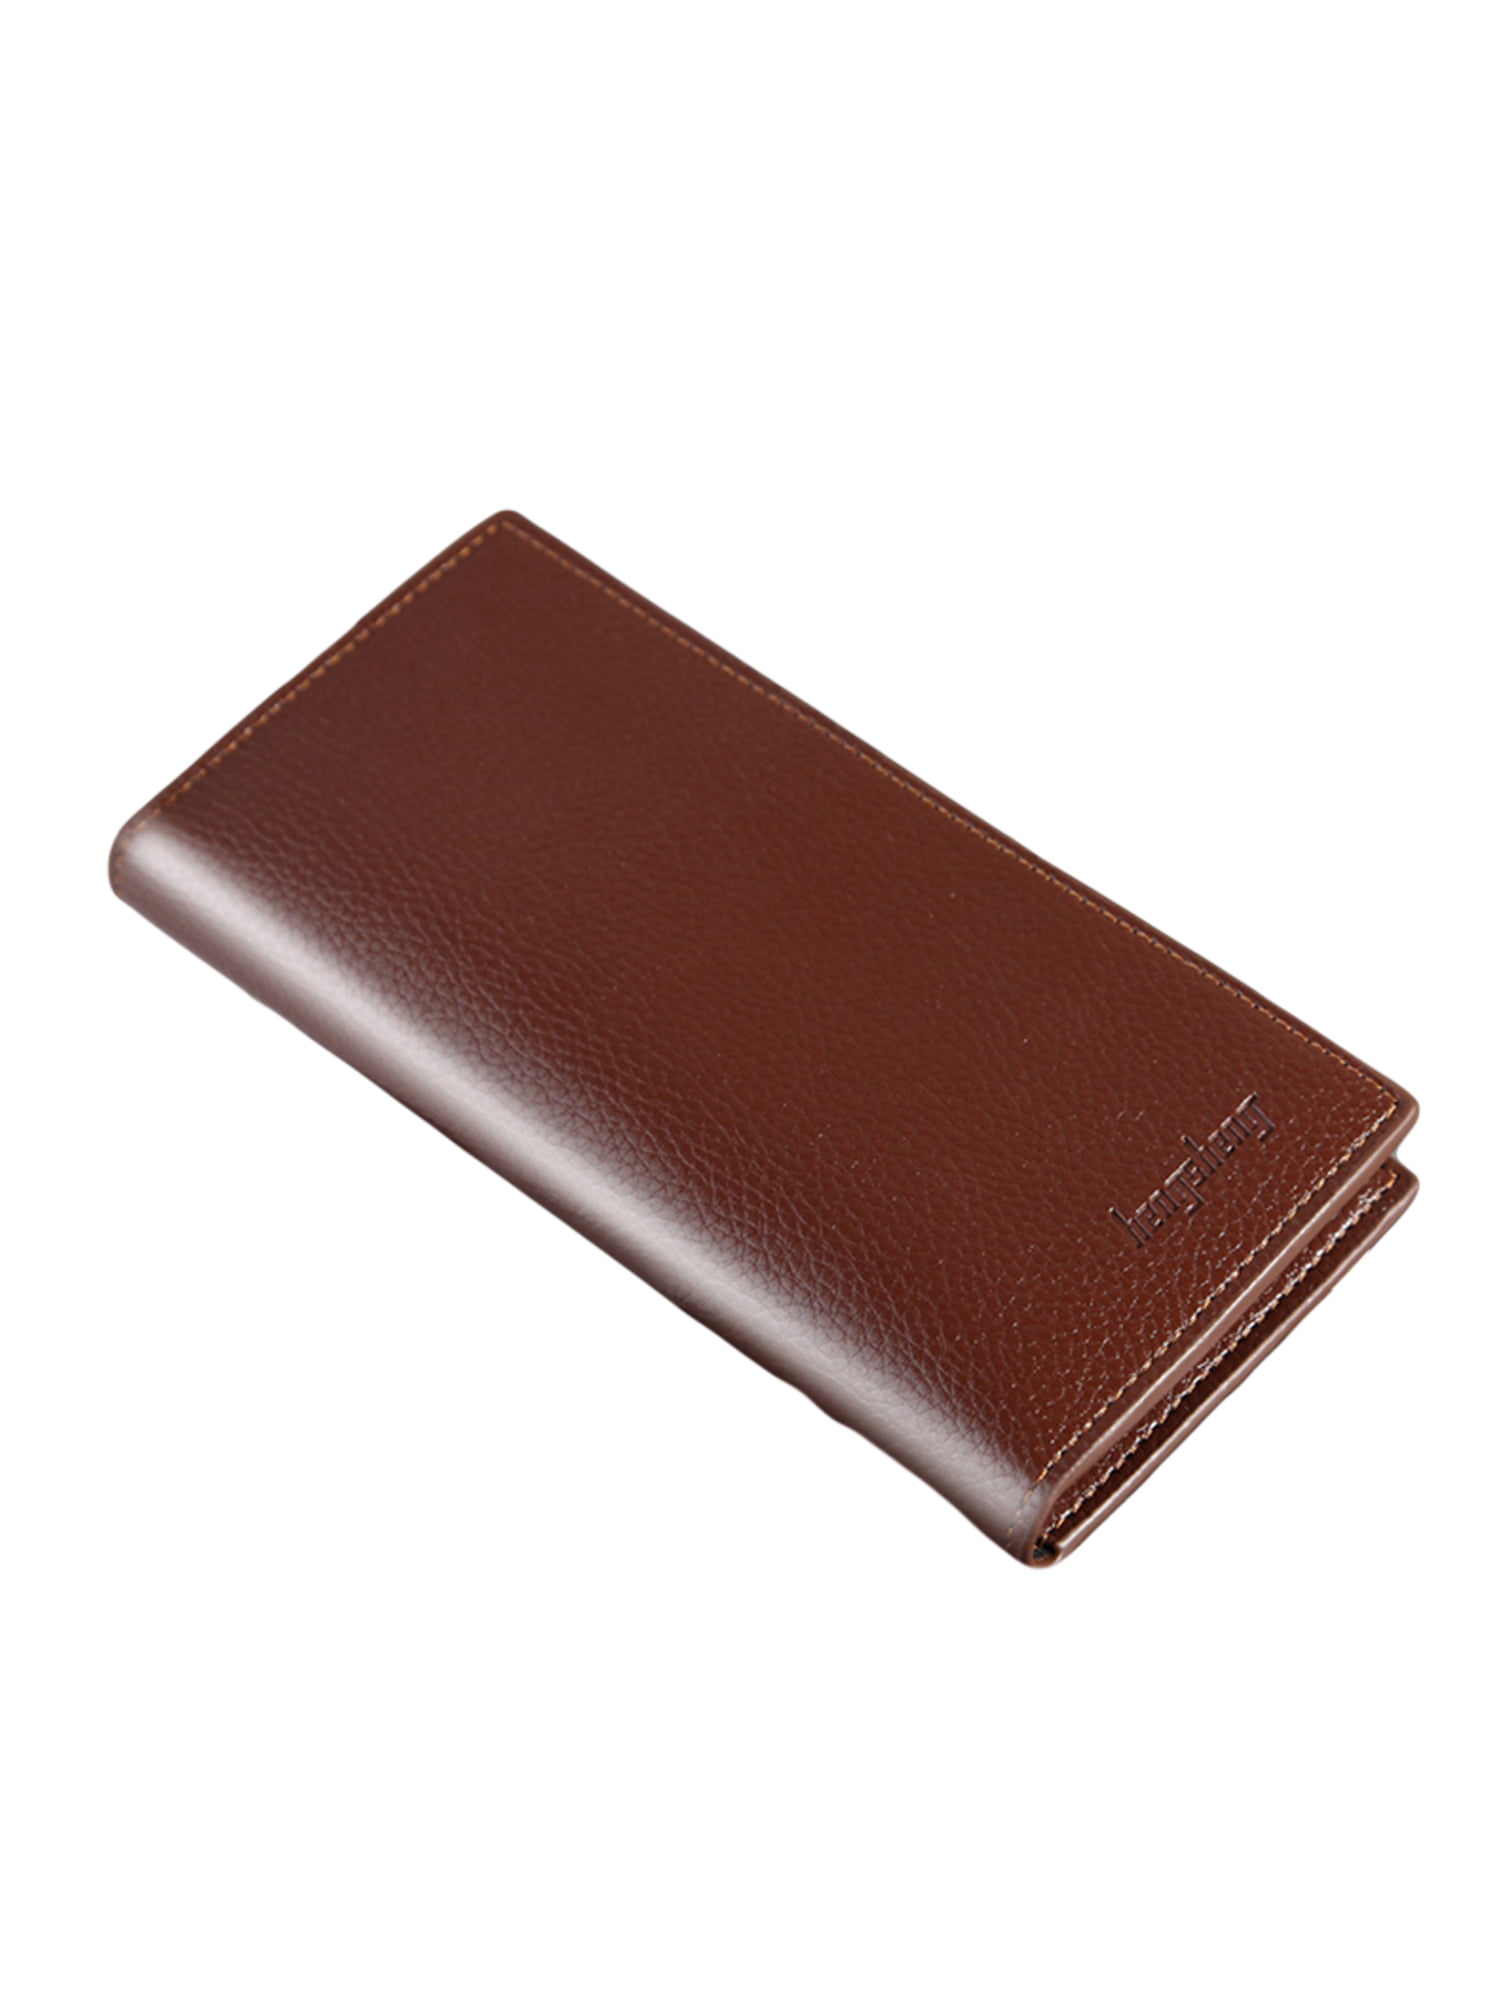 Long Fashion Men Genuine Leather Bifold Card Purse Wallet iPhone 8 Plus Case NEW